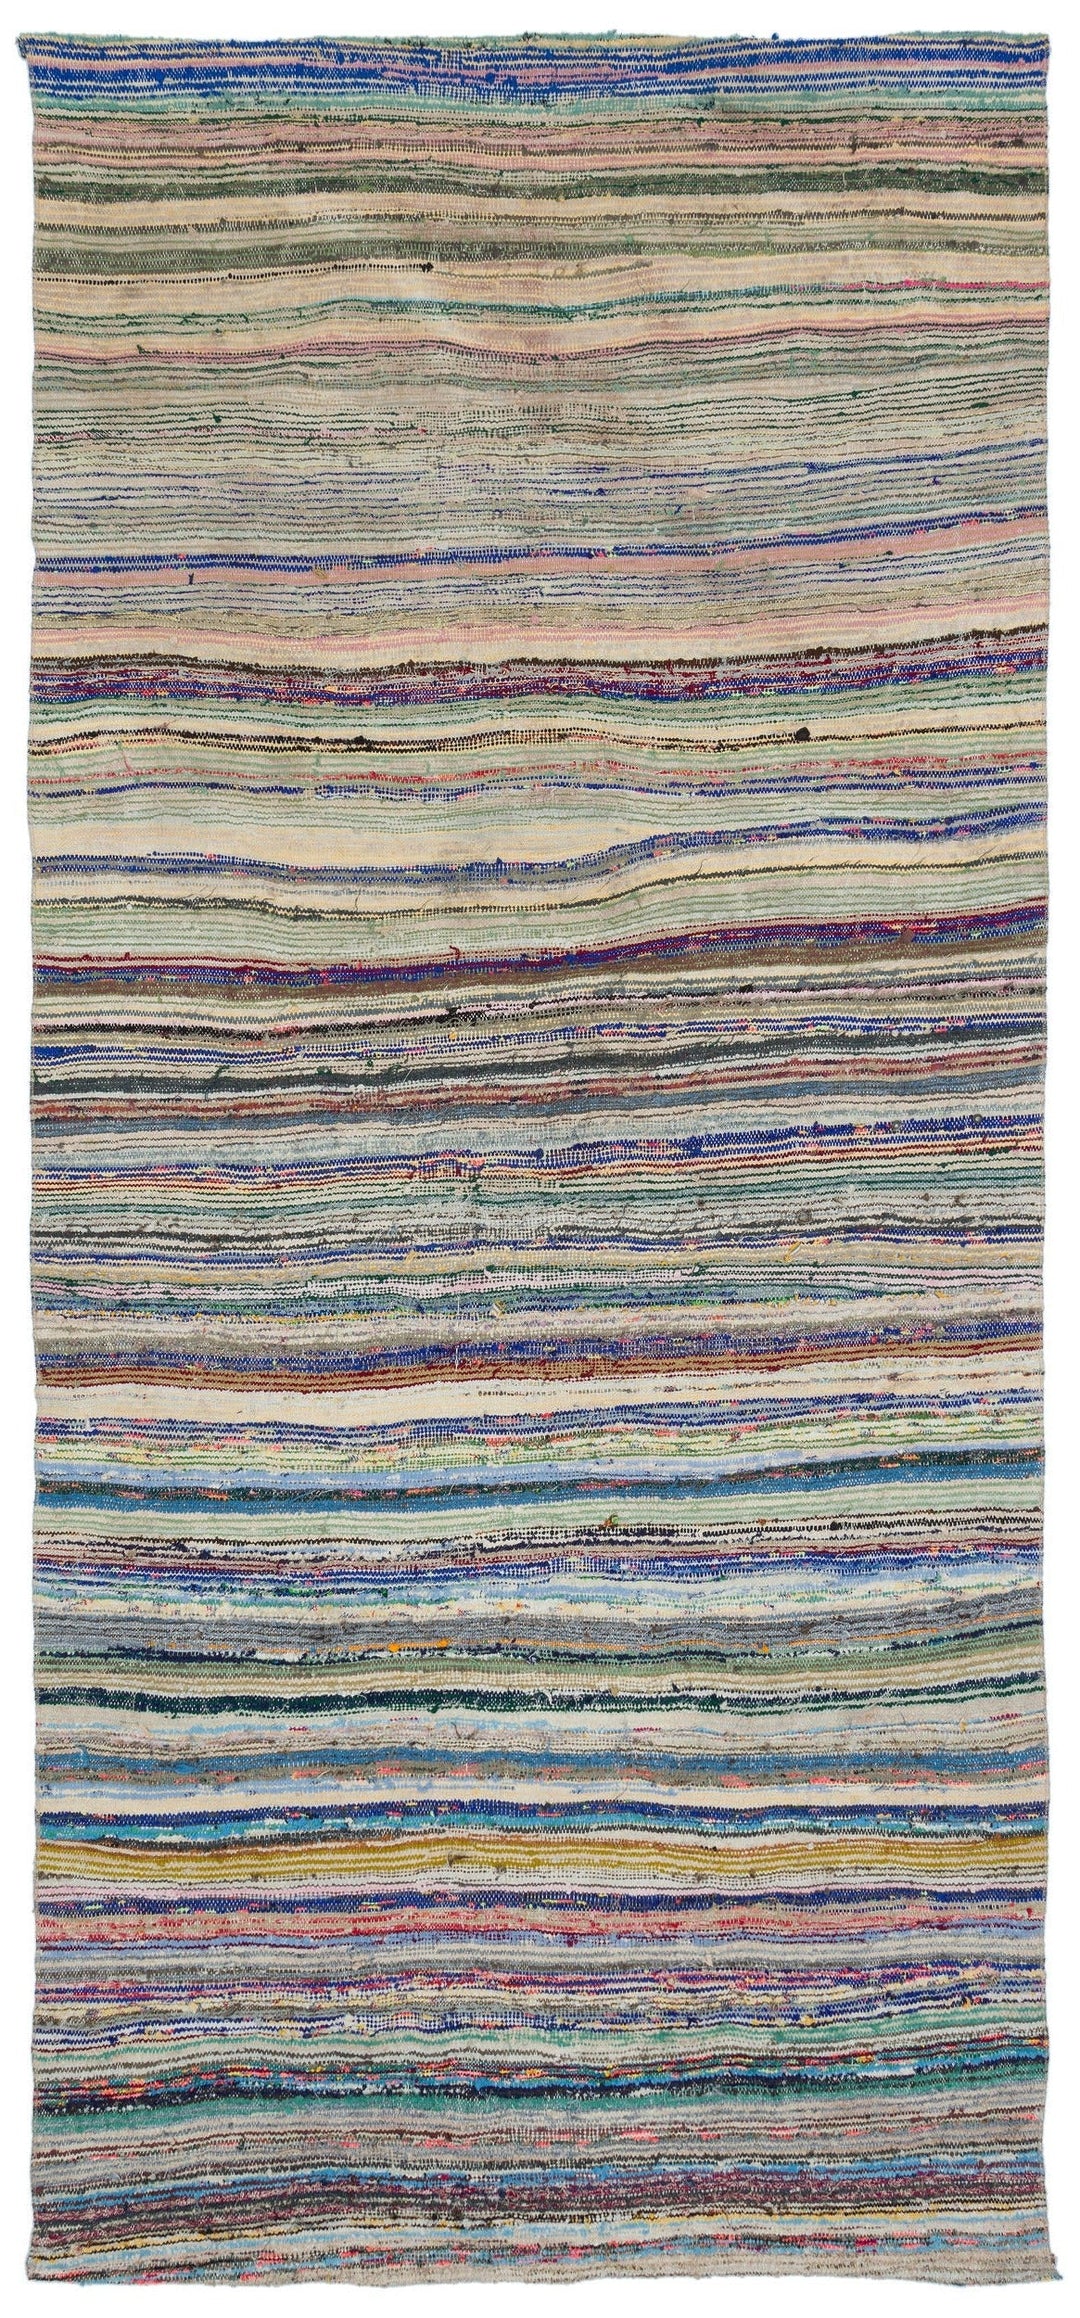 Cretan Beige Striped Wool Hand-Woven Carpet 154 x 322